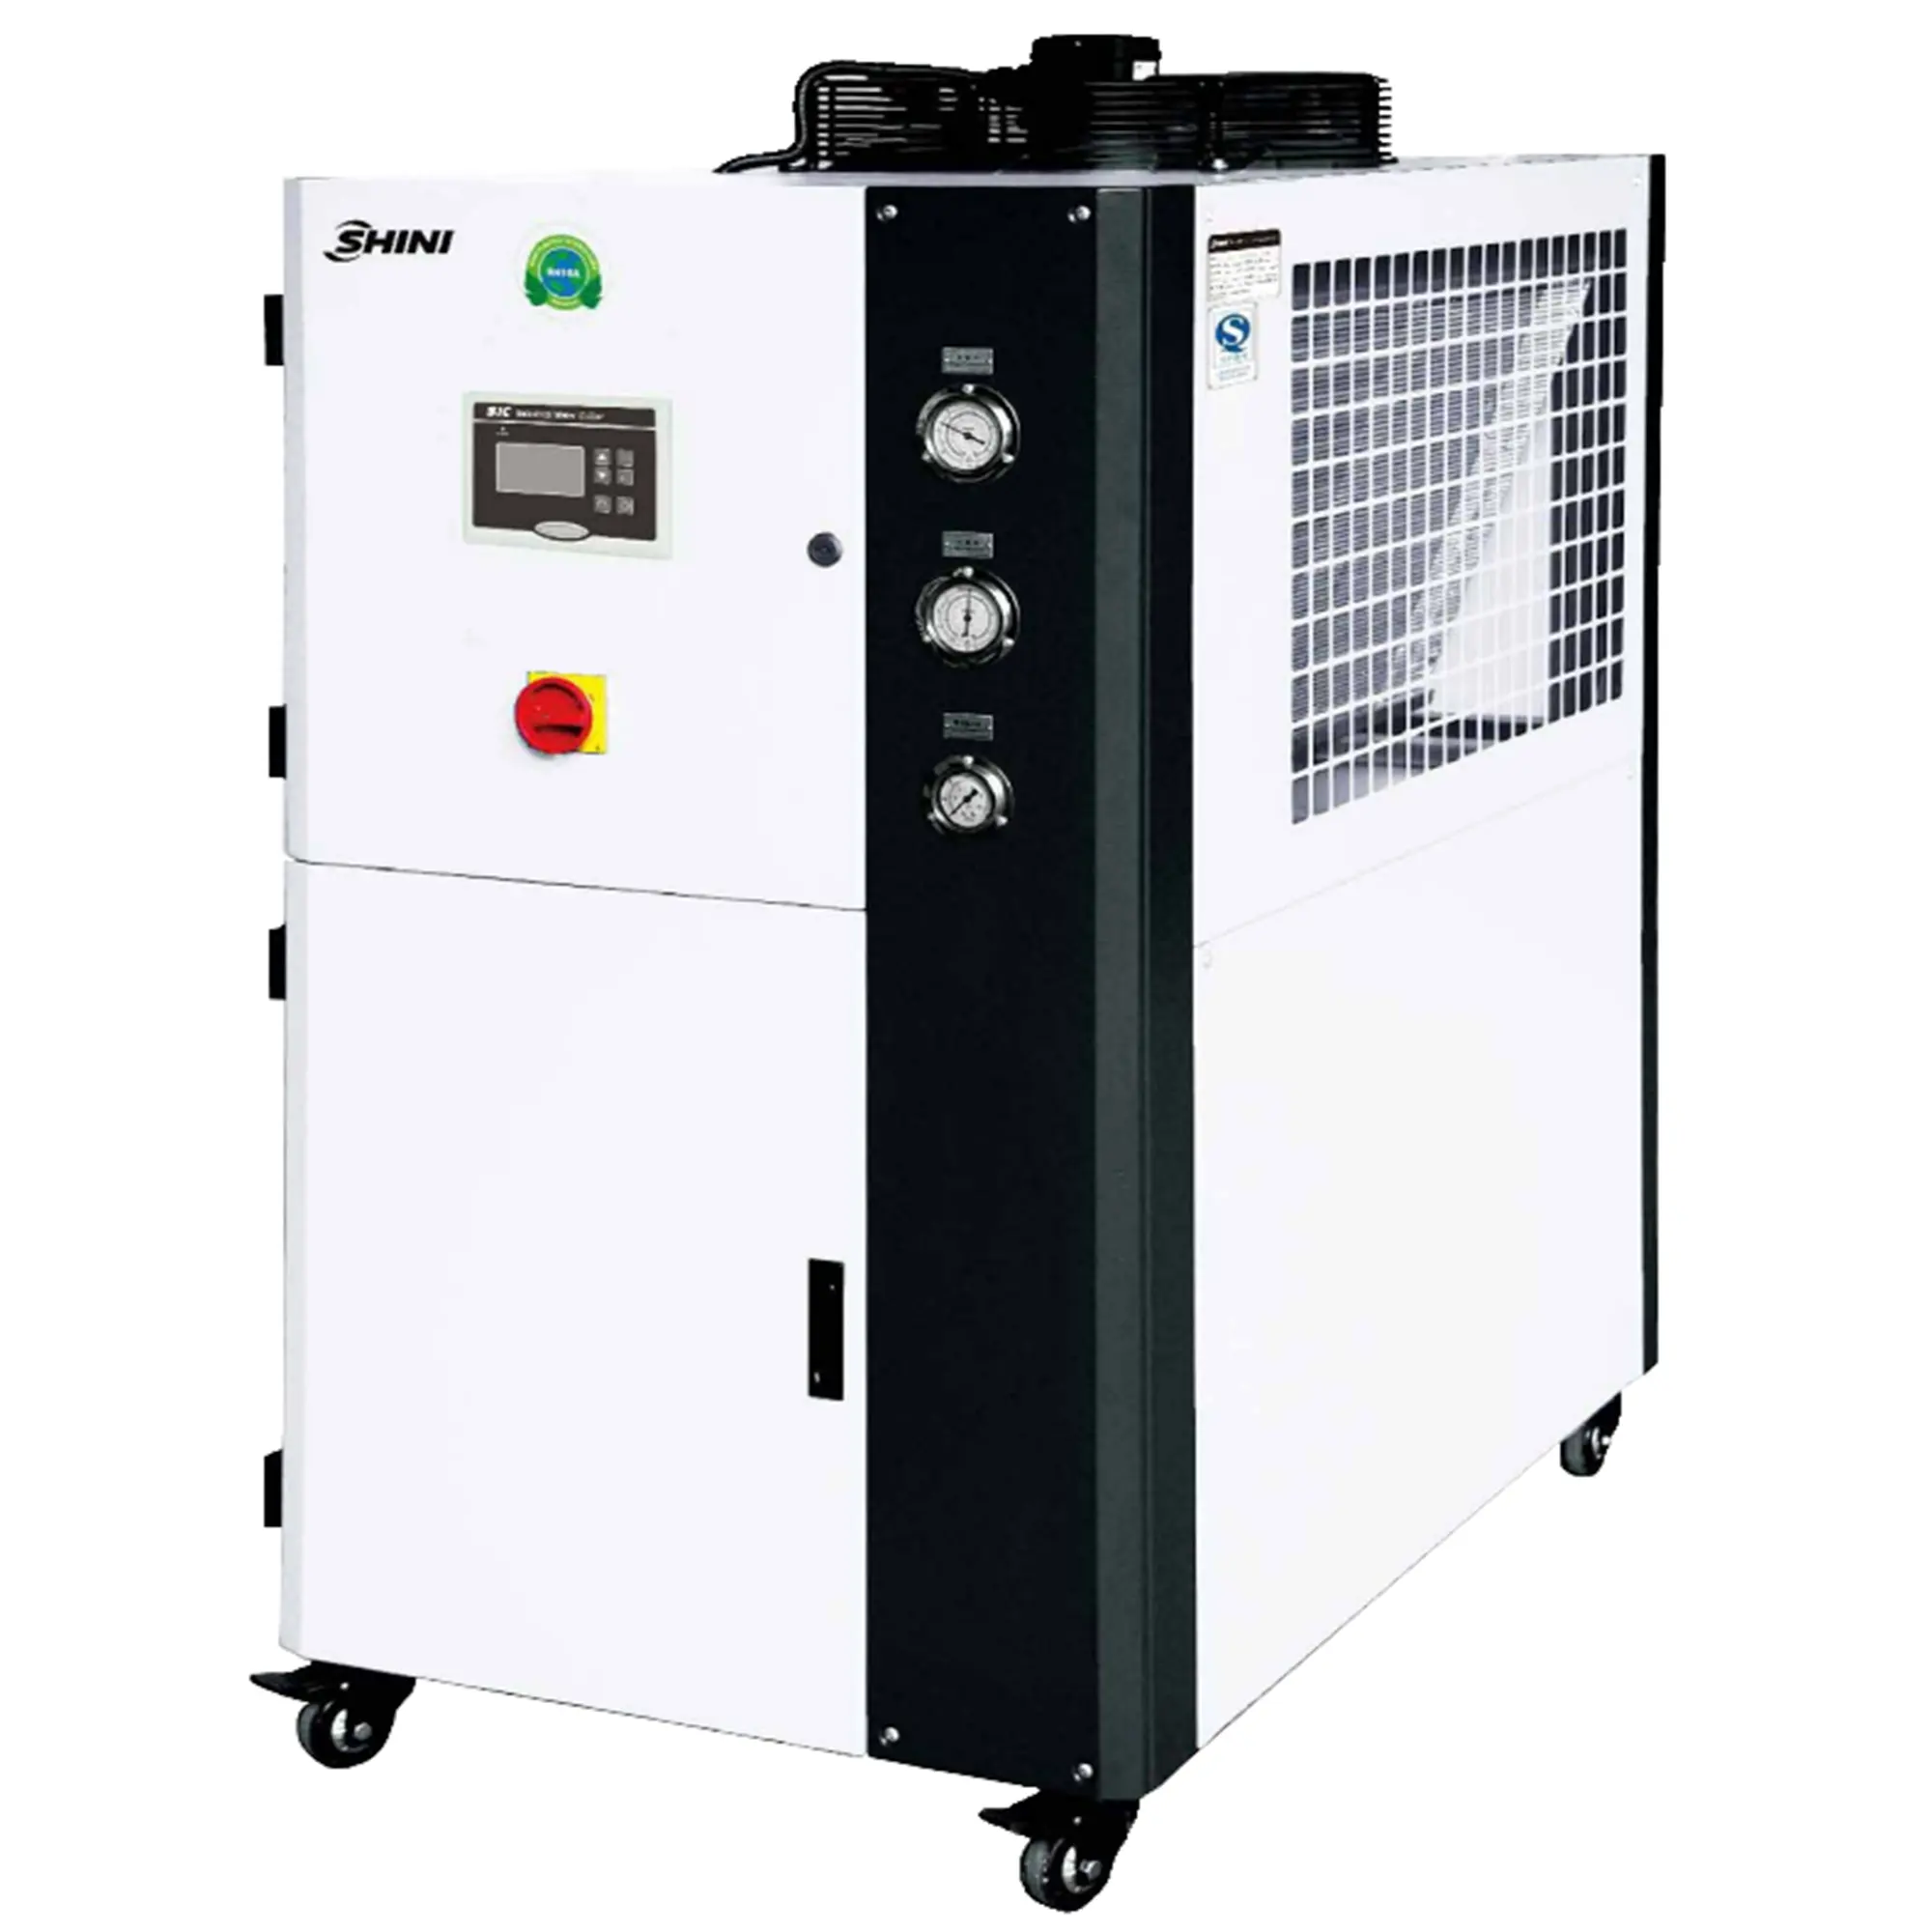 SHINI Industrie kühler luftgekühlter luftgekühlter Industrie kühler R22/R407C Nieder temperatur 5HP Kompressor Industrie wasserkühler